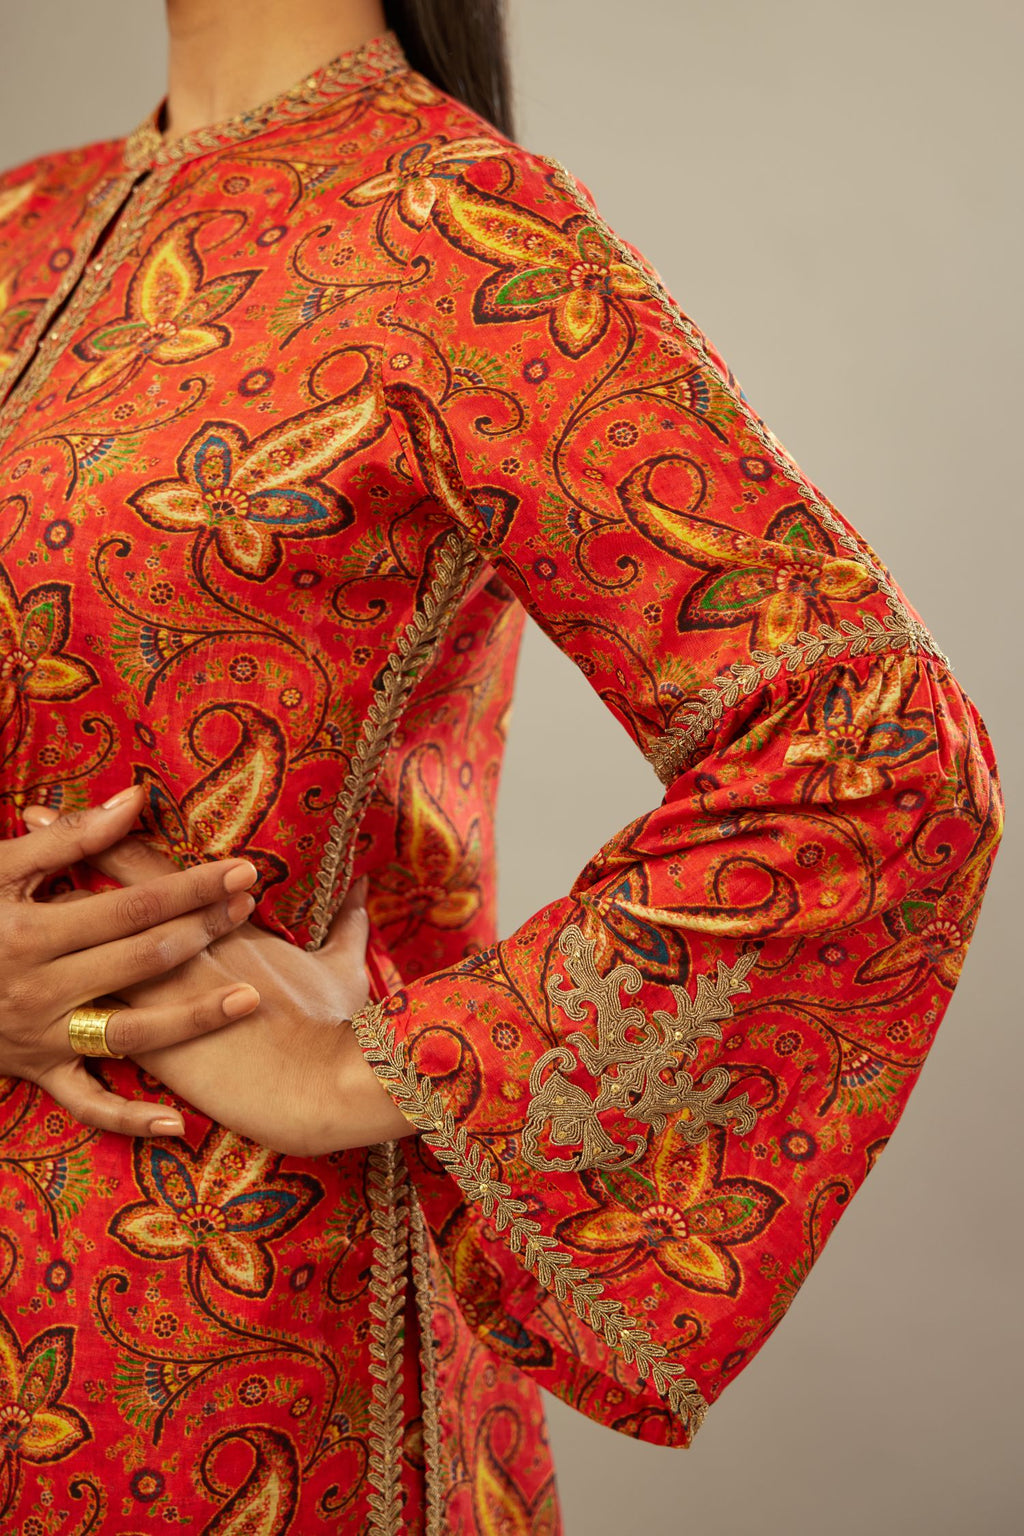 Burnt orange digital printed dori embroidered silk kurta set, highlighted with gold sequin handwork.